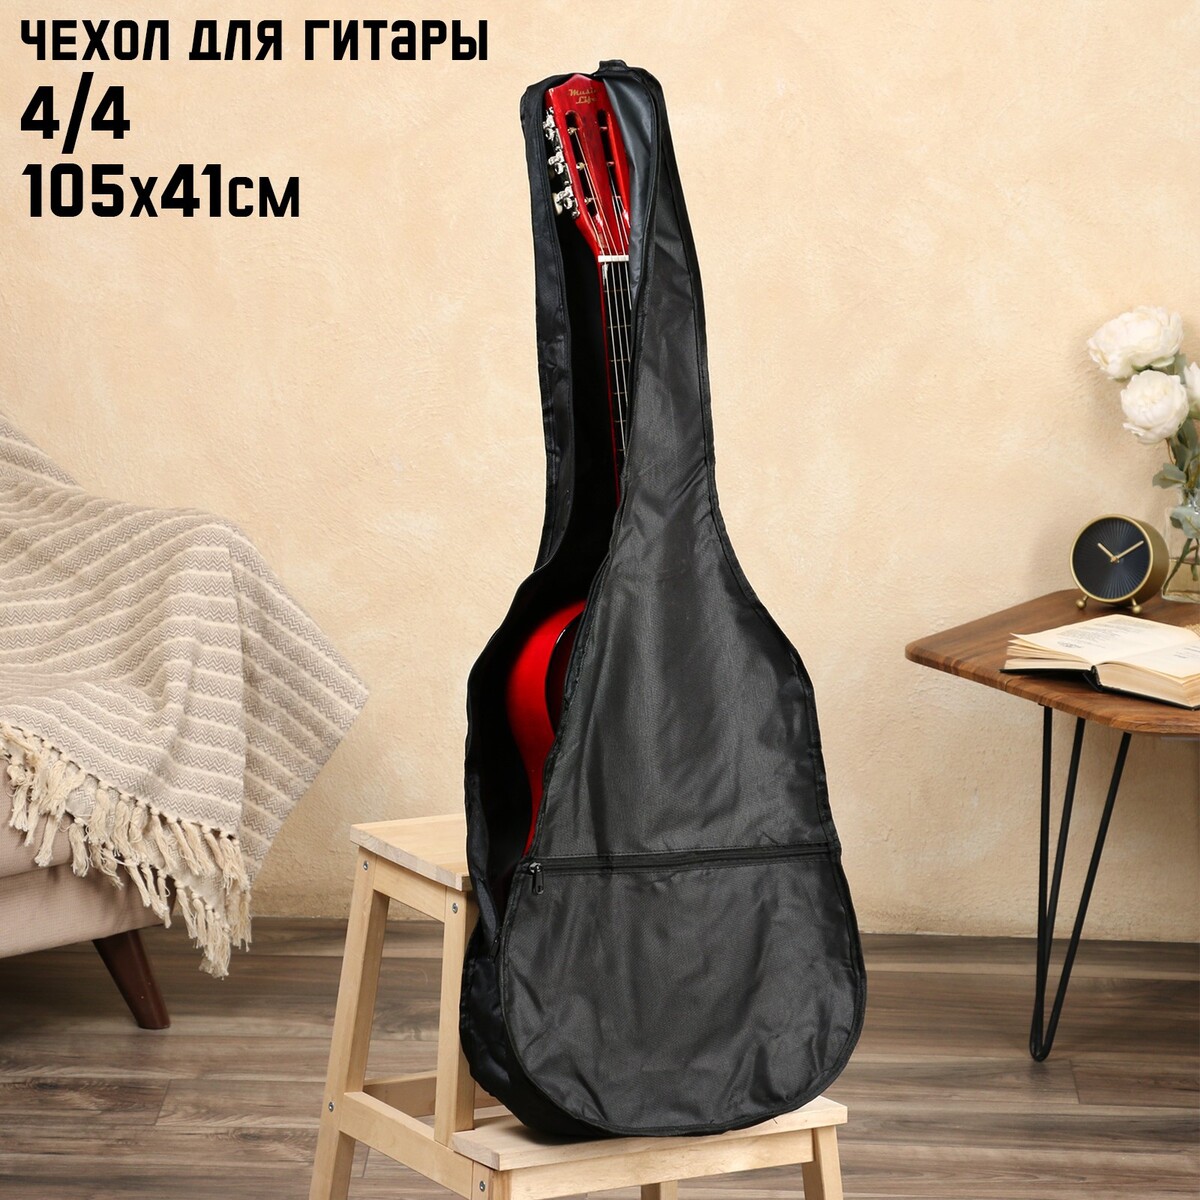 Чехол для гитары music life, черный, 105 х 41 см чехол для гитары классический в клетку c 2 мя ремнями объемные карманы 100 х 39 х 6 см